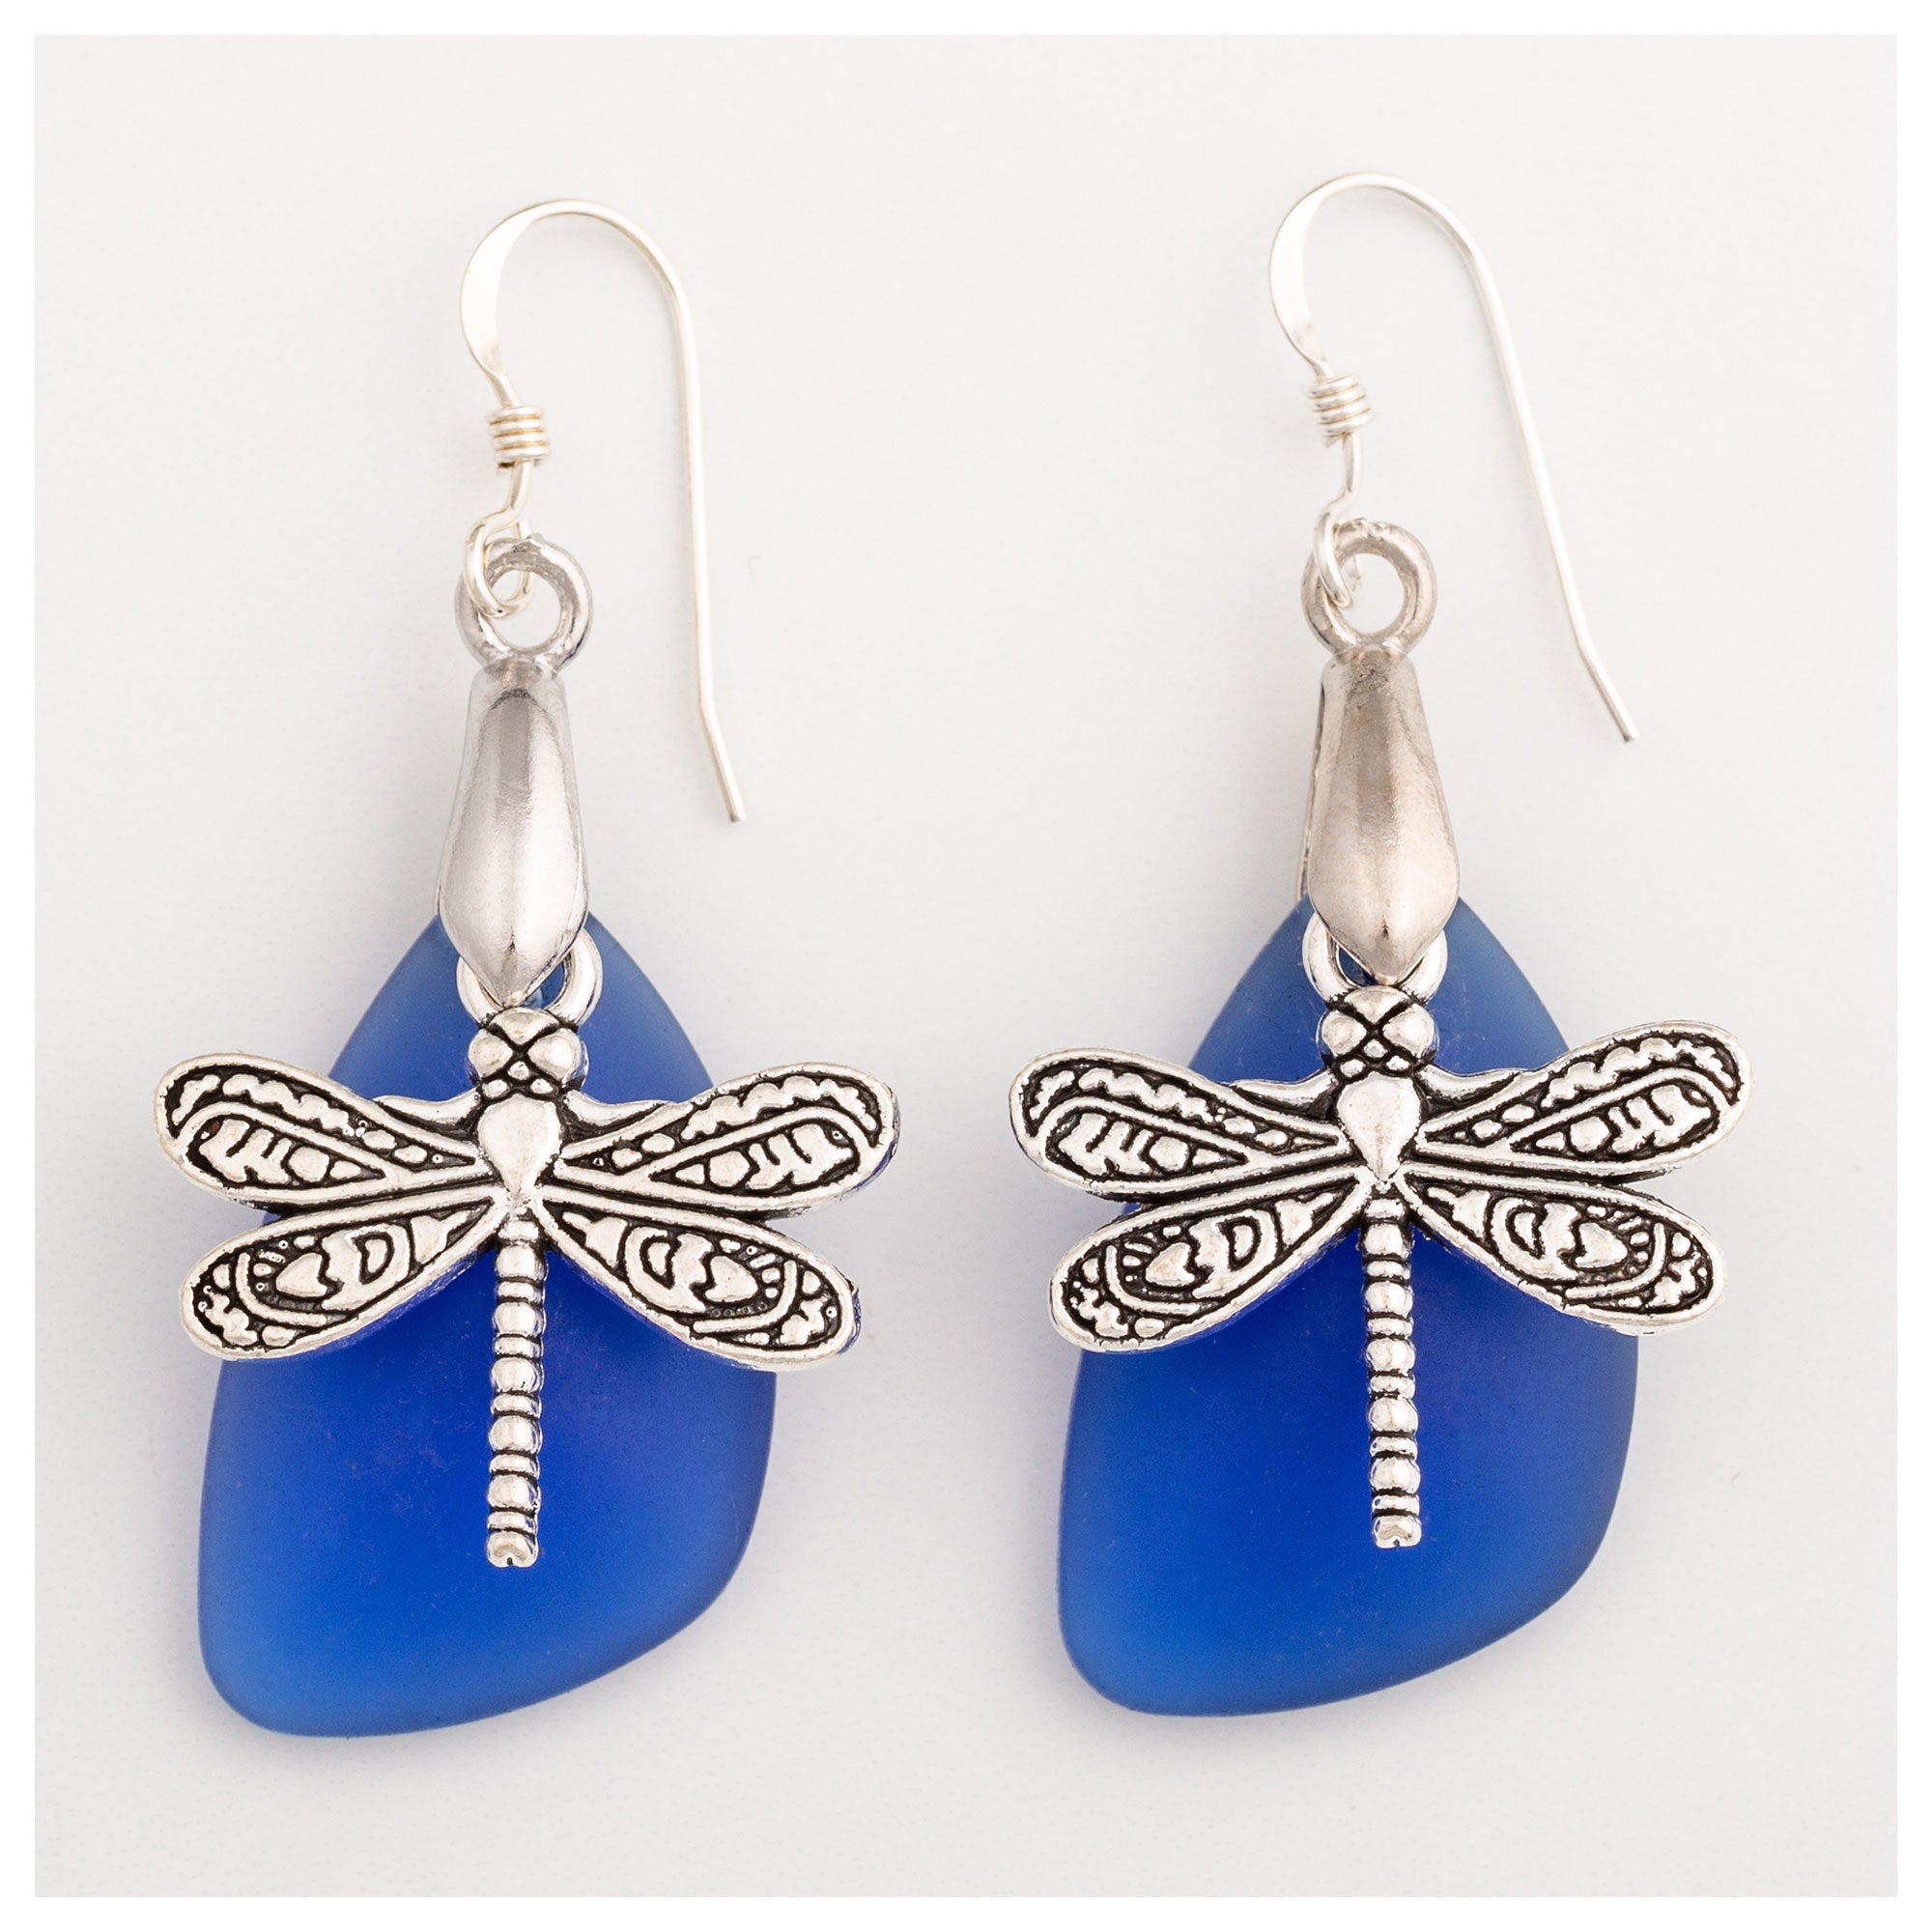 Dragonfly Sea Glass Earrings - Cobalt